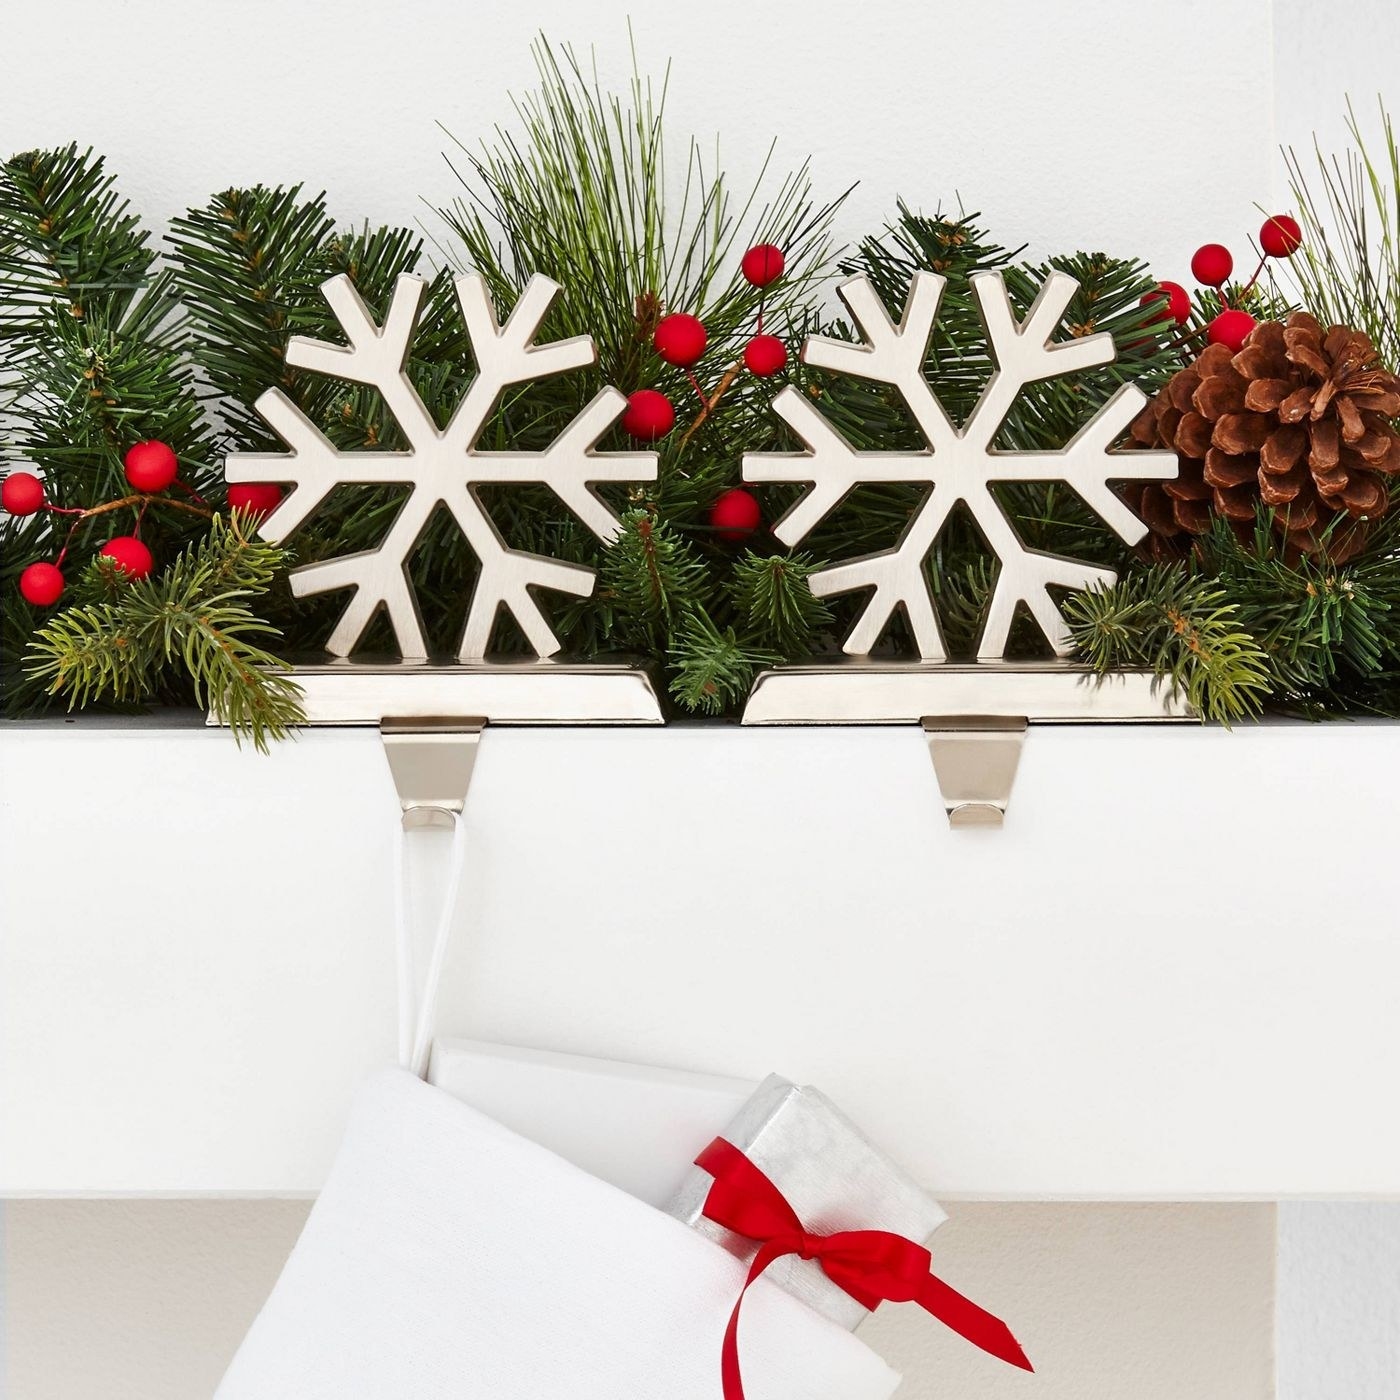 the snowflake stocking hangers